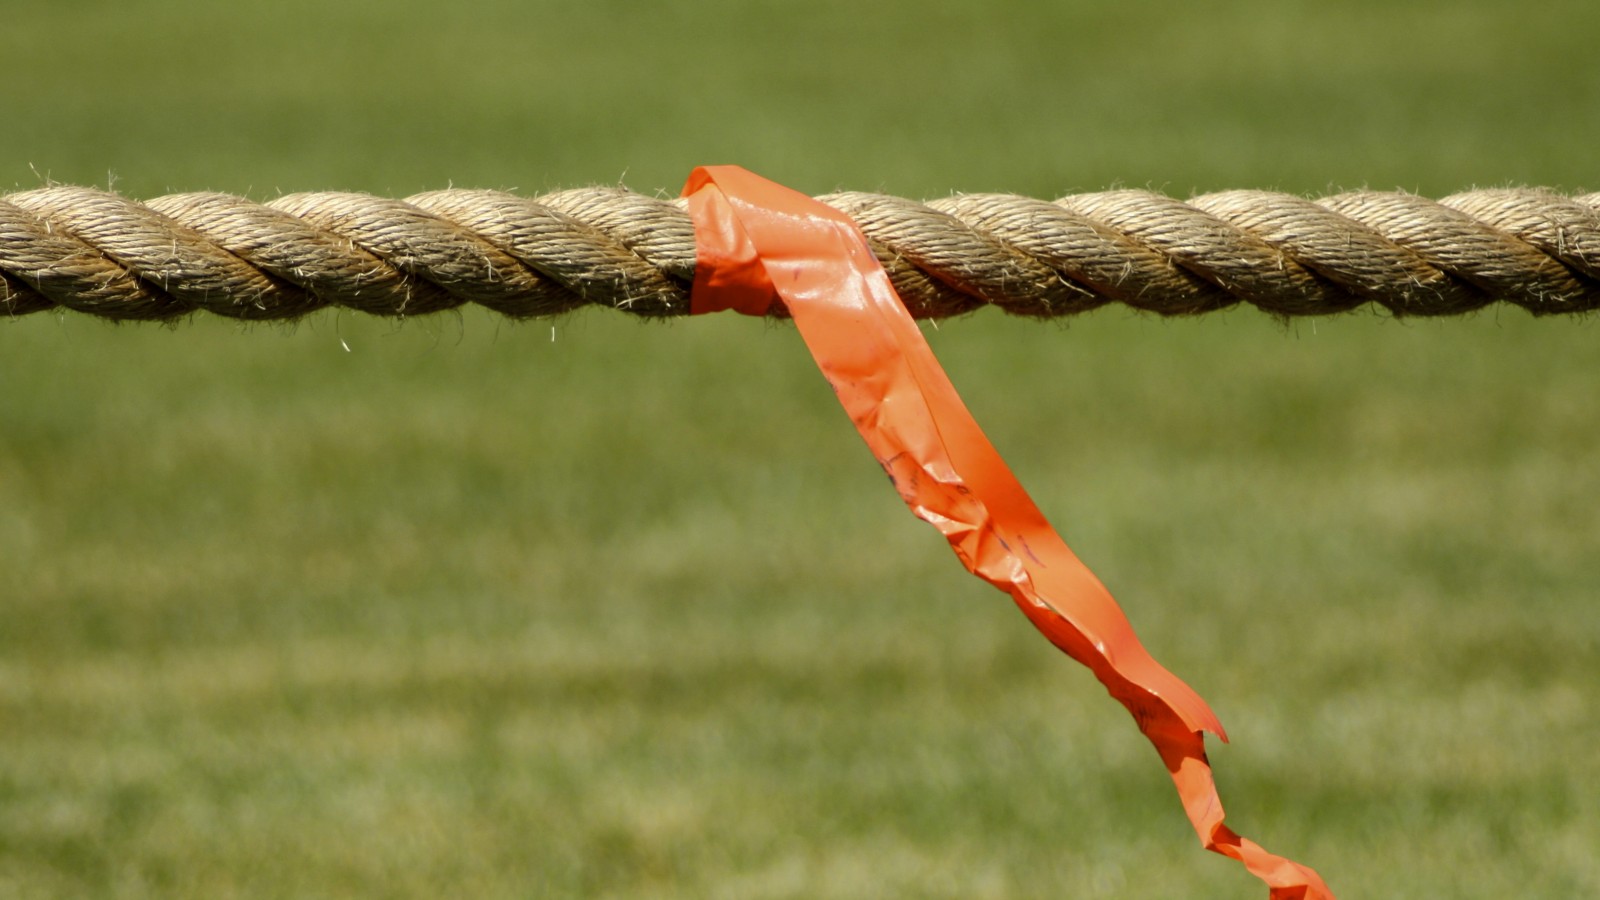 Tug of war rope